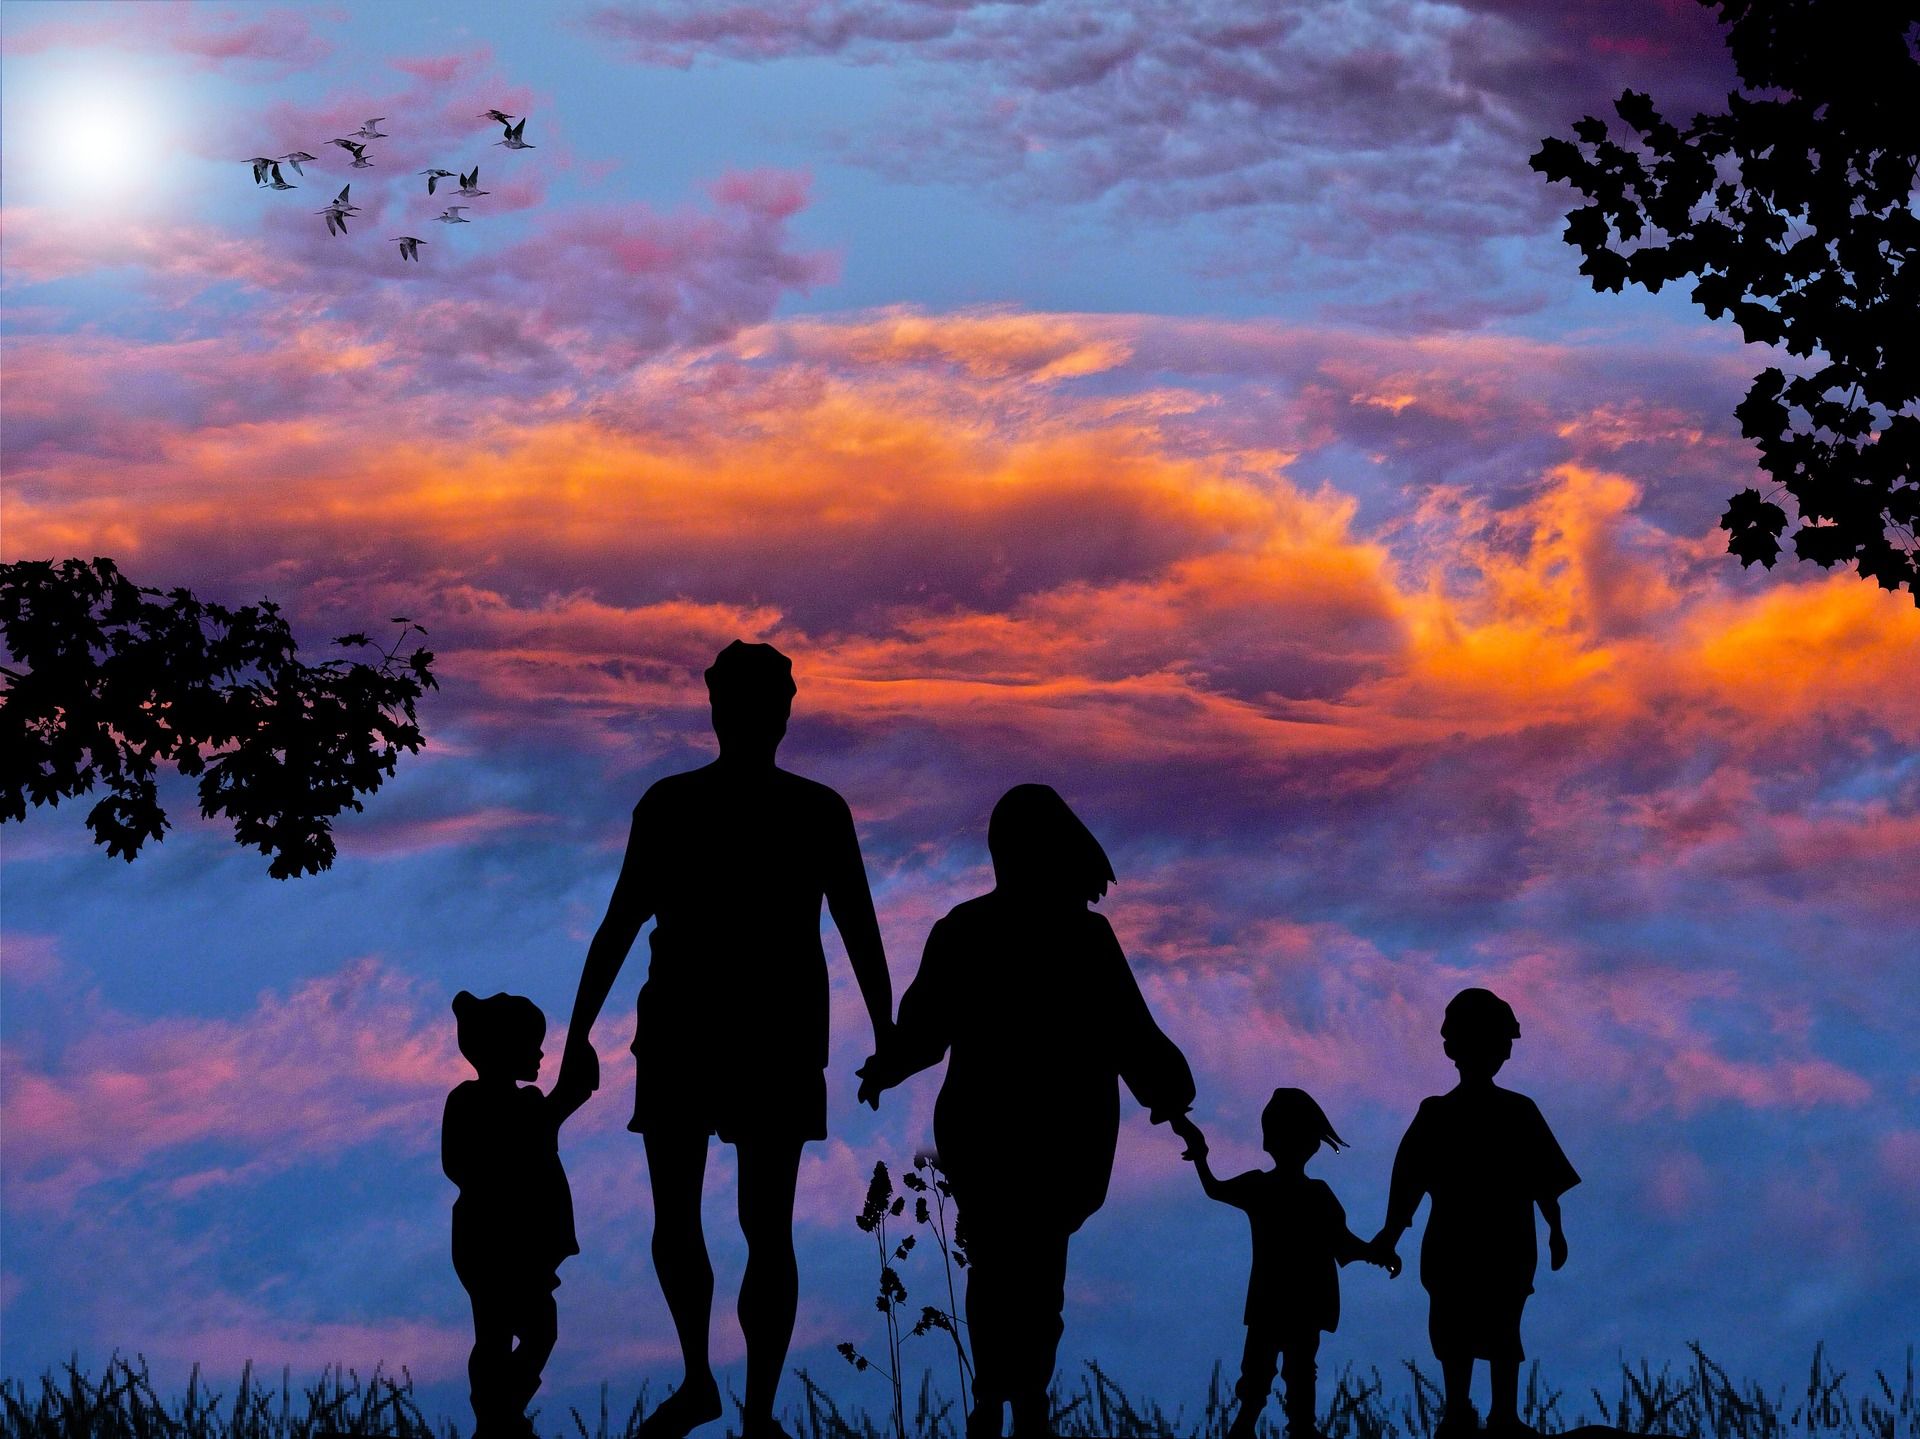                               Secrets of Happy Families: Wisdom from Empirical study runs counter to traditional wisdom                             
                              